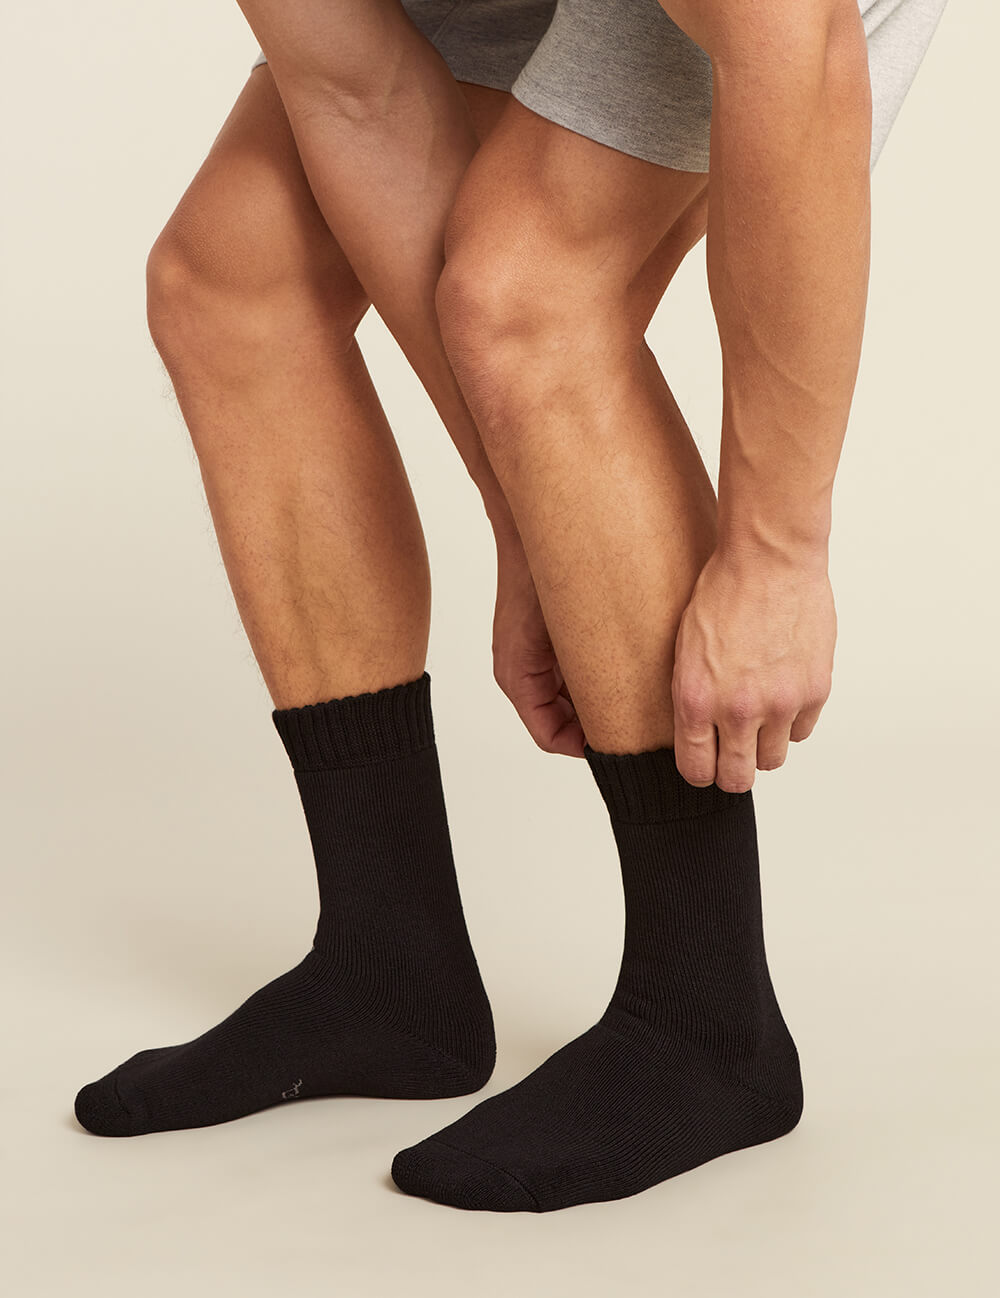 Men's Extra Thick Workboot Socks